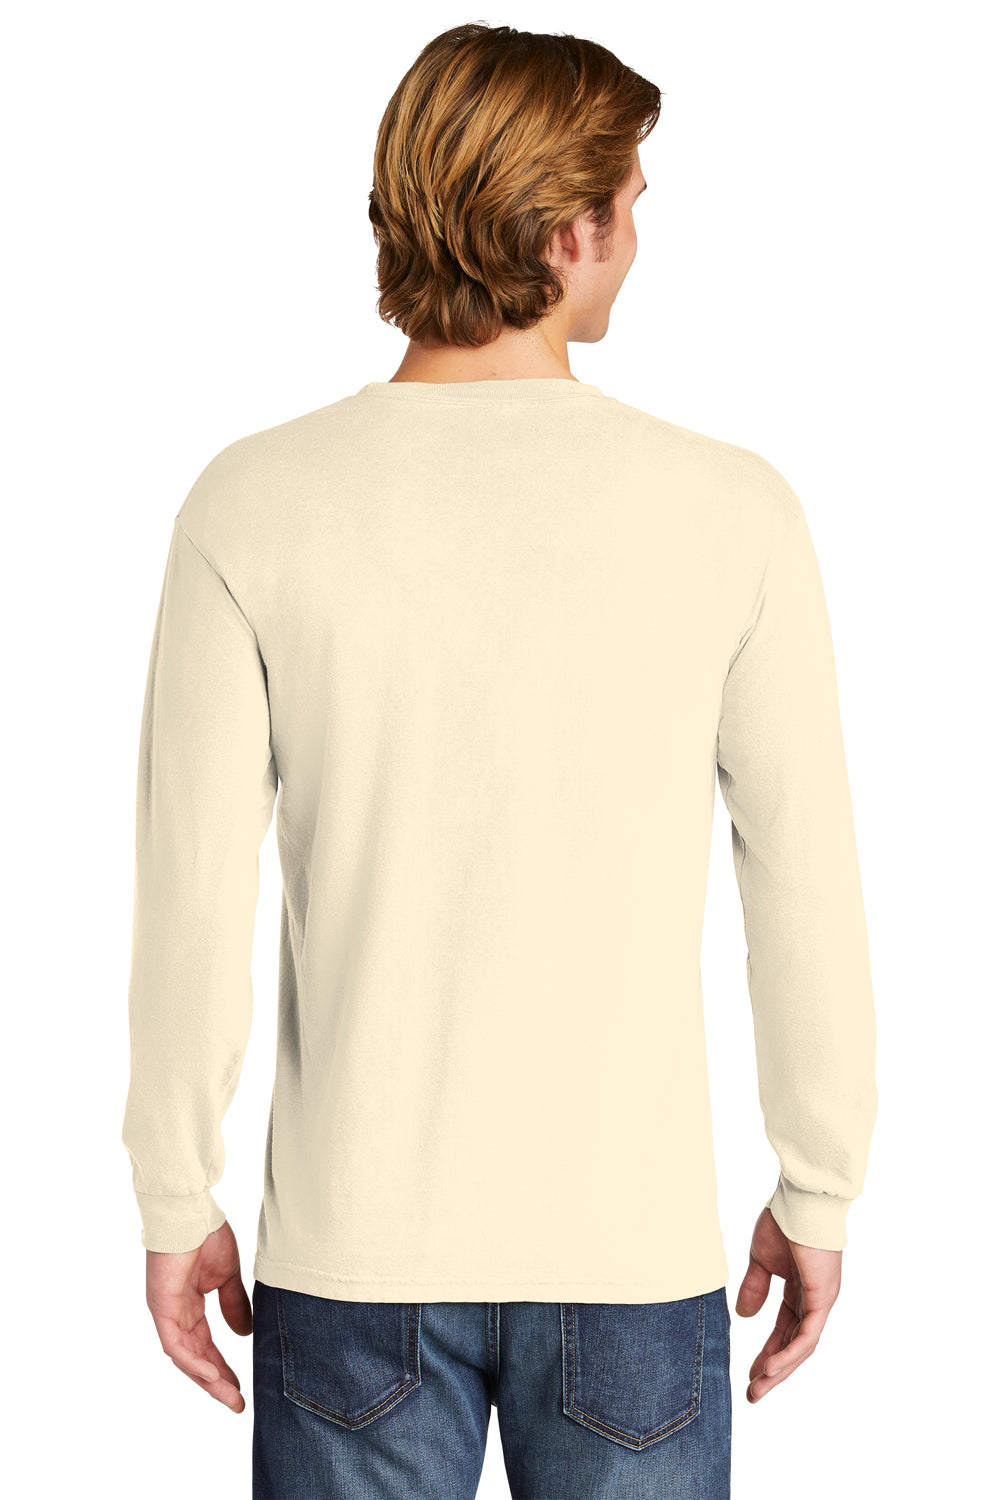 Comfort Colors Mens Long Sleeve Crewneck T-Shirt Ivory Back